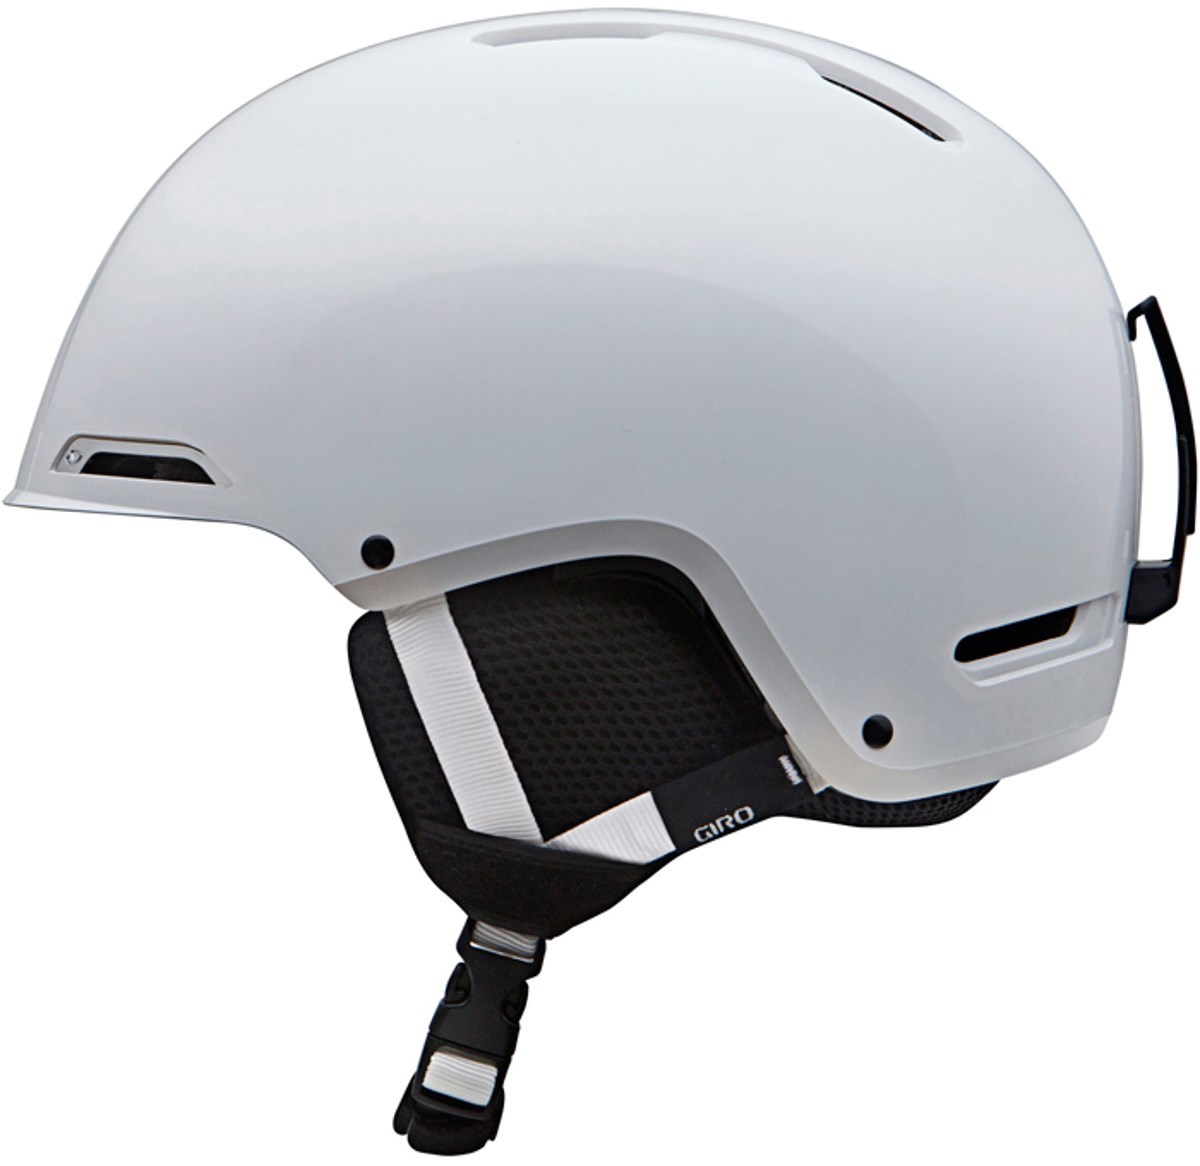 Giro Rove Snowboard Helmet product image